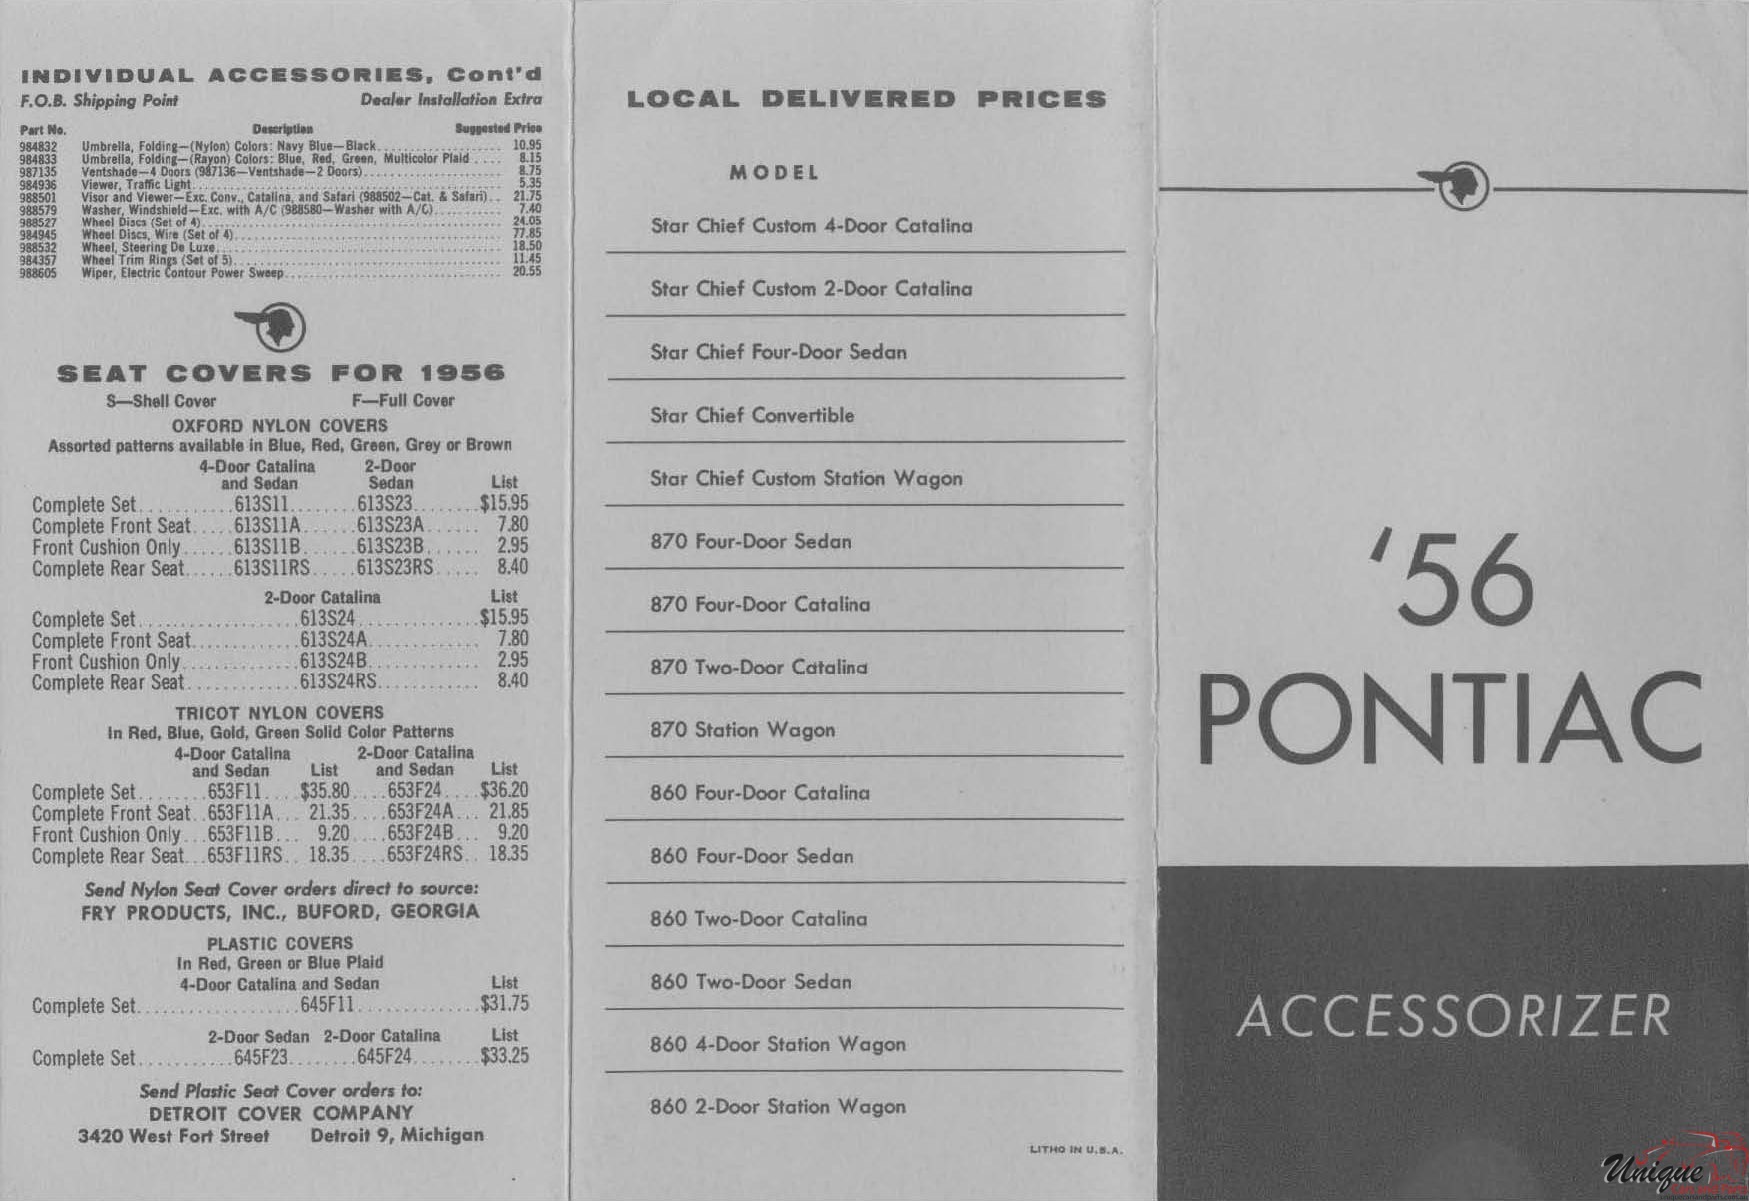 1956 Pontiac Accessorizer Brochure